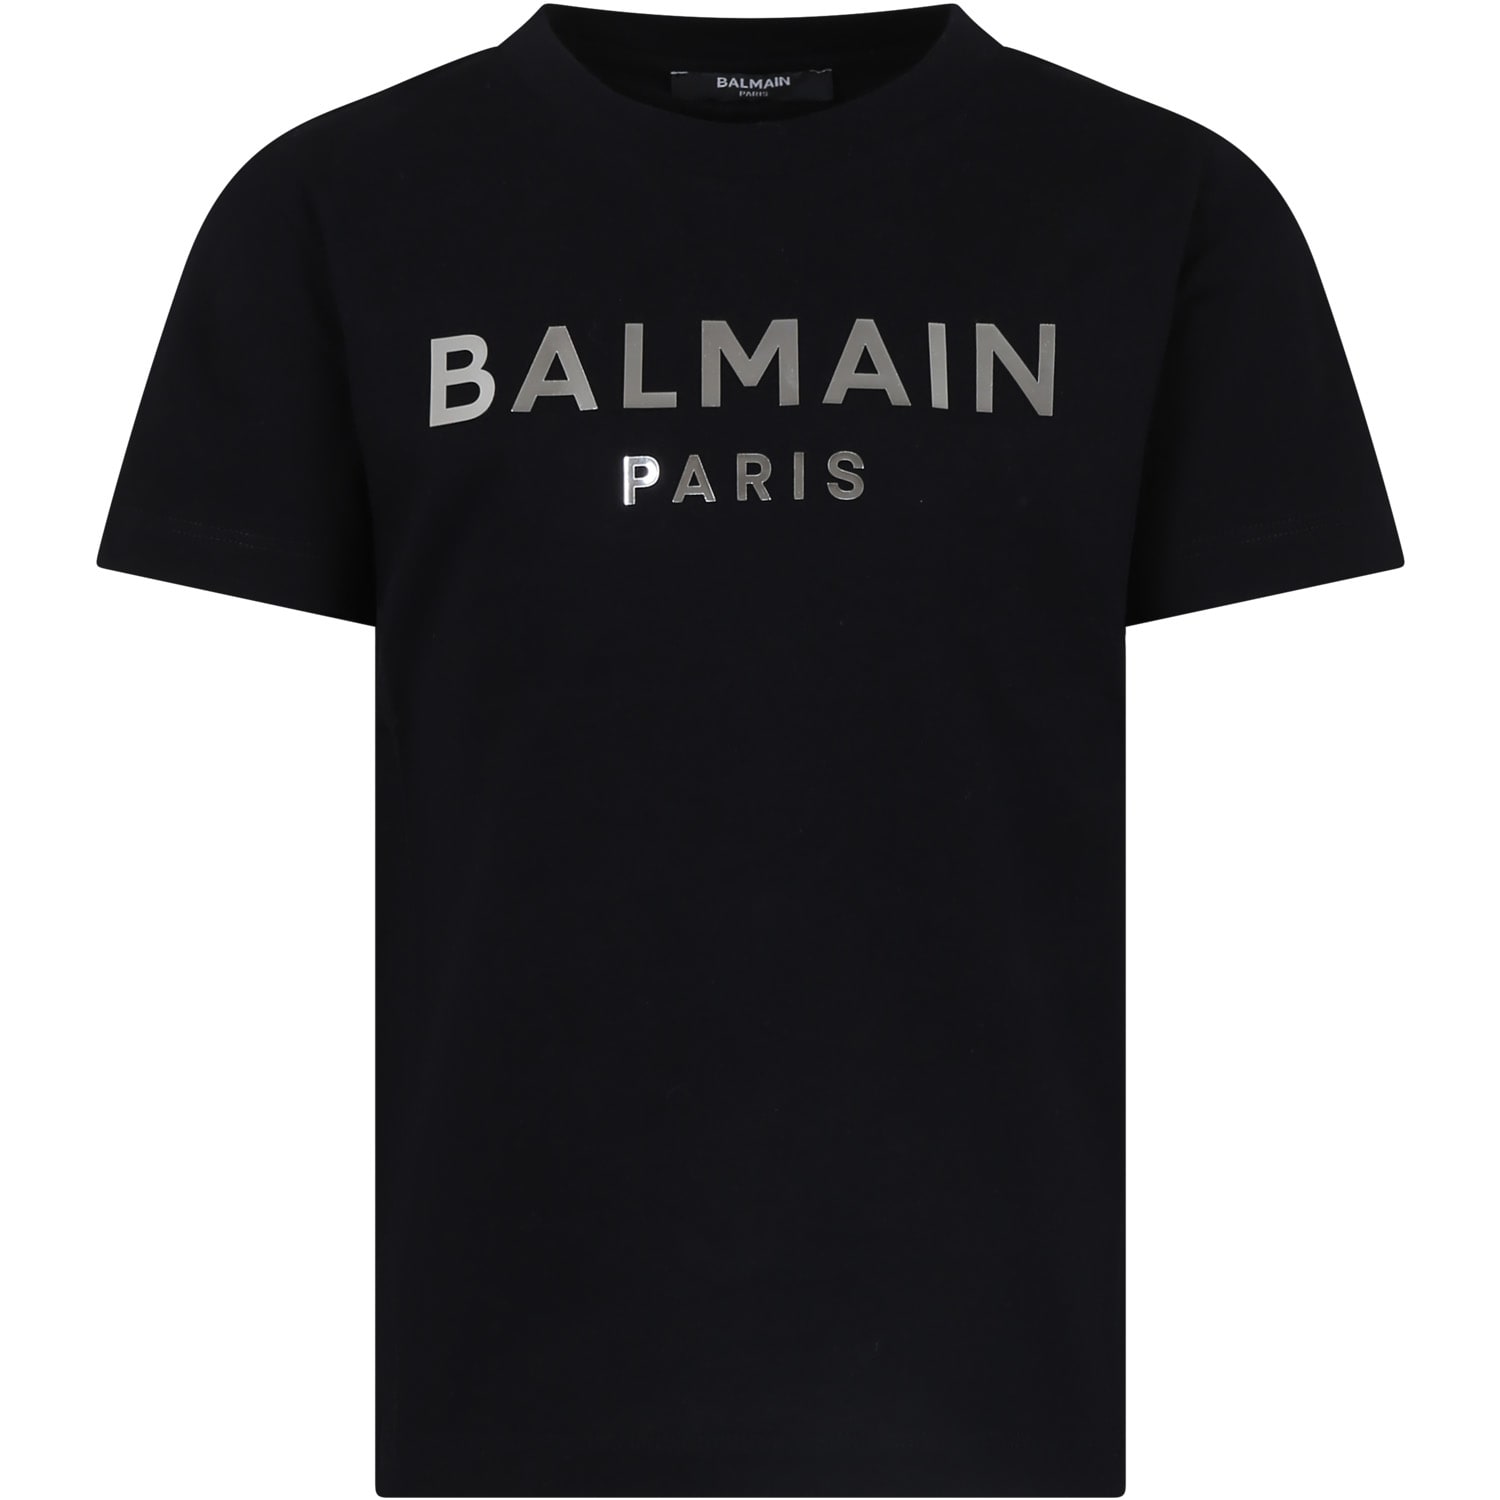 Balmain Black T-shirt For Kids With White Logo